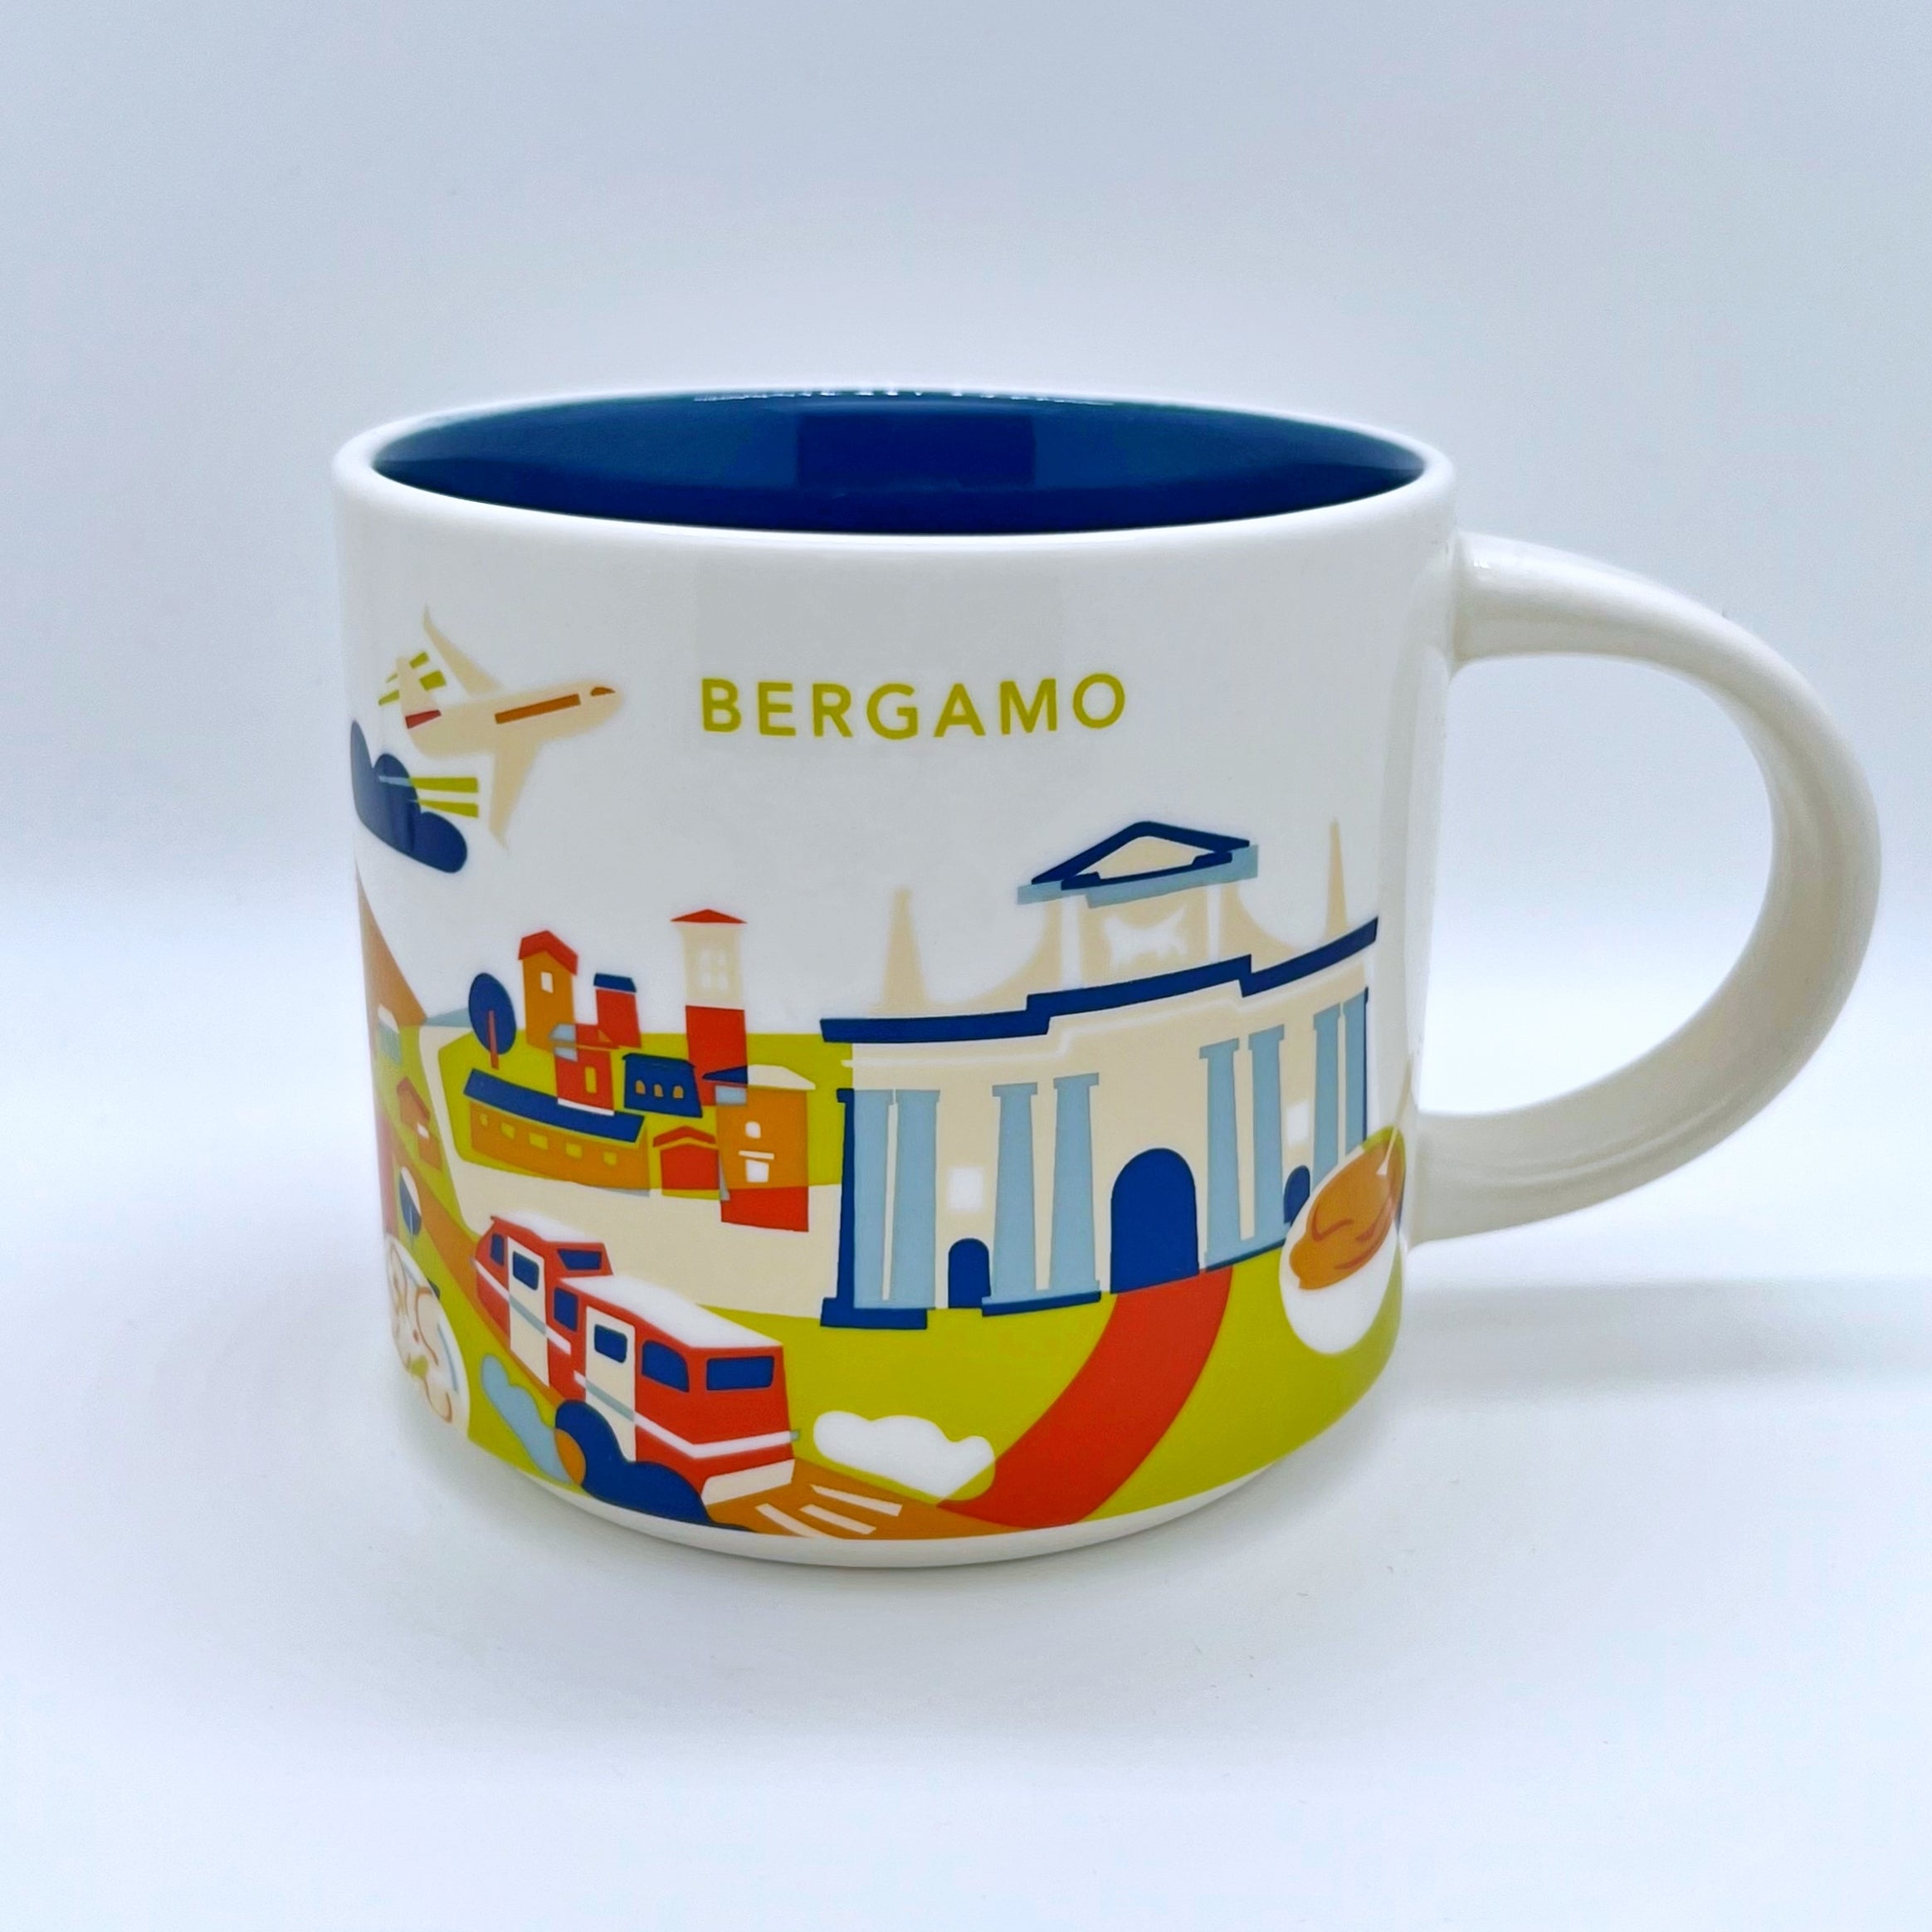 Bergamo City Kaffee Tasse